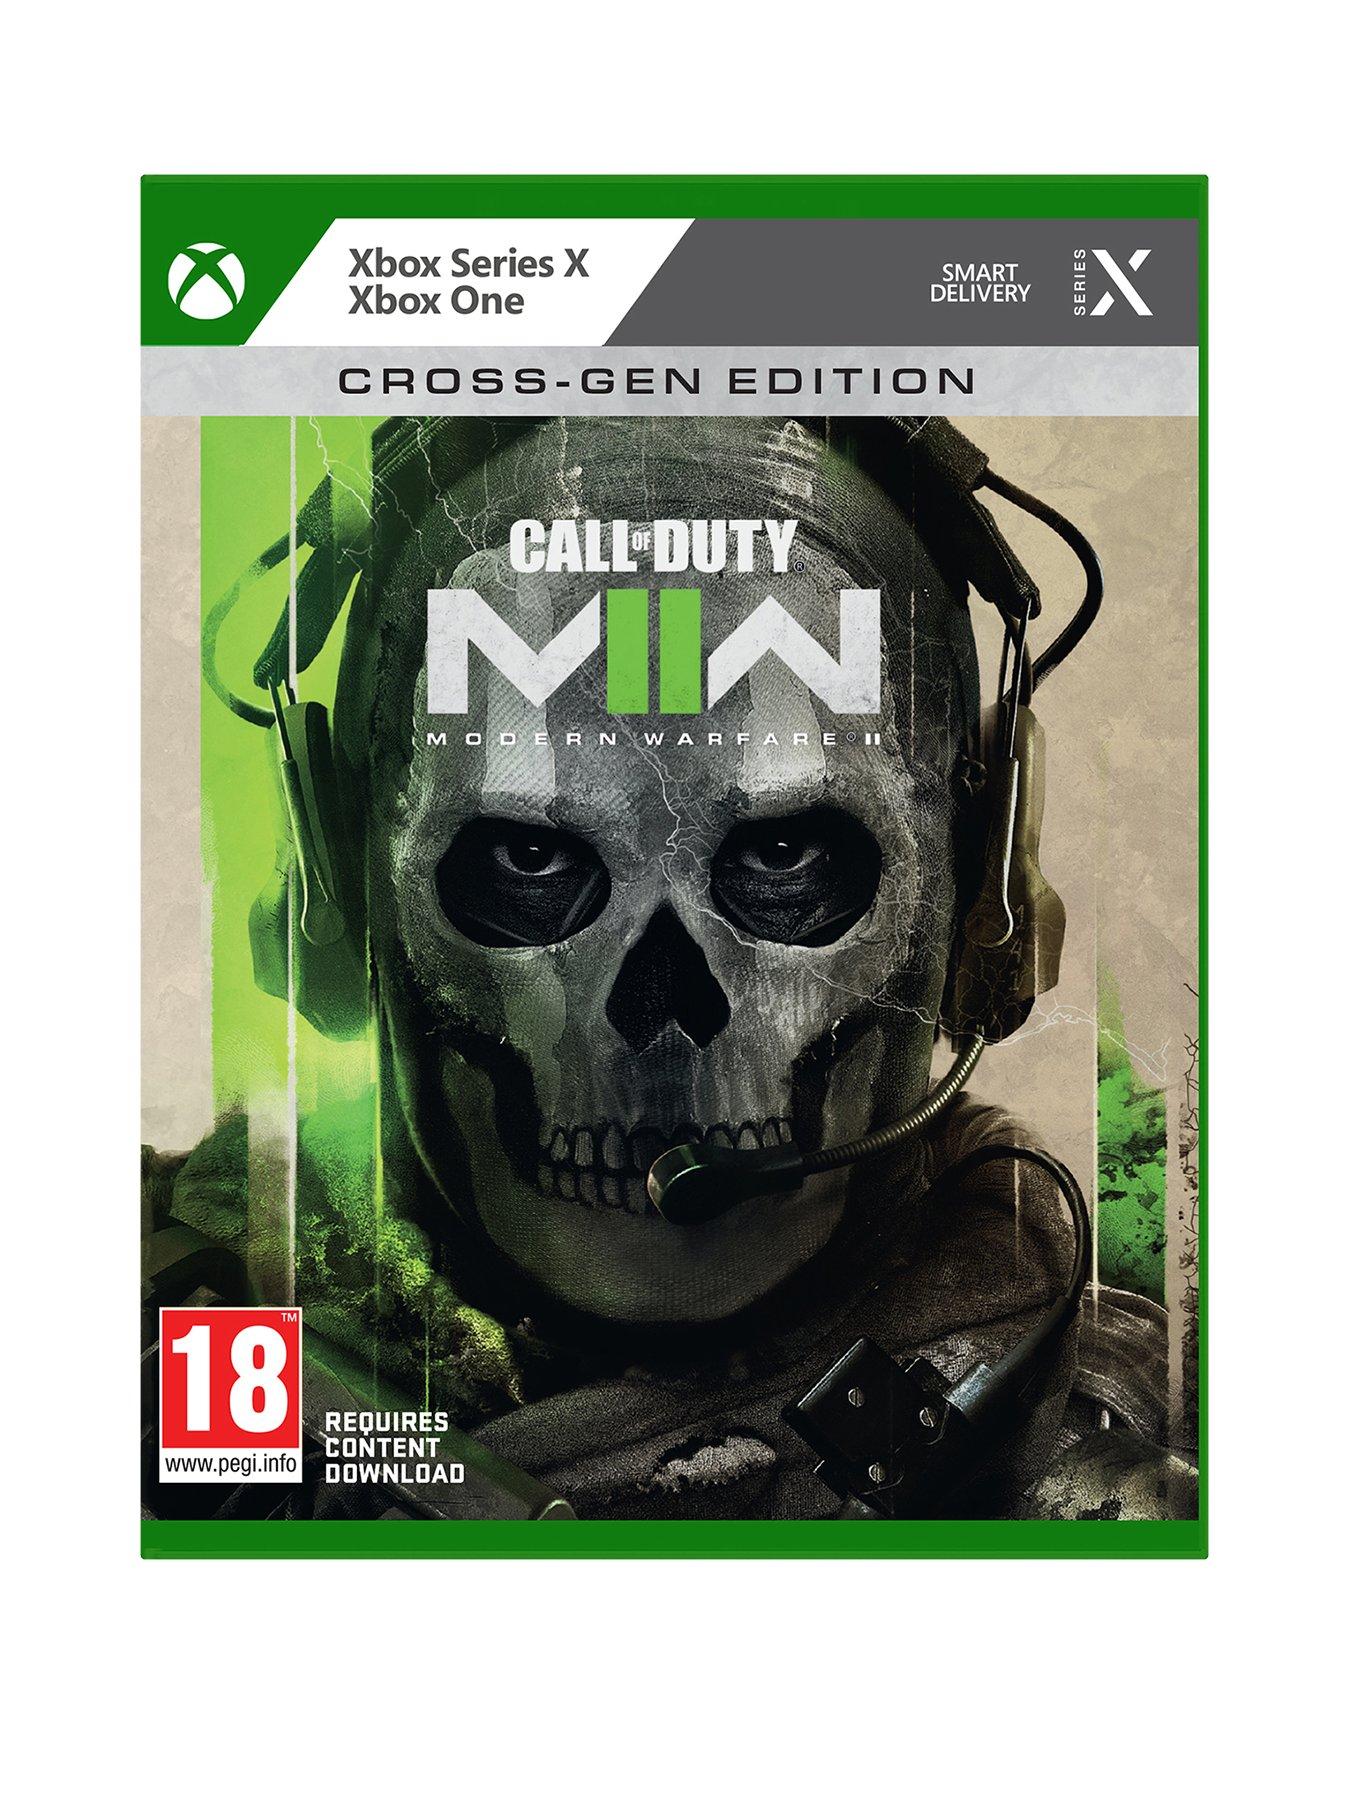 Buy cheap Call of Duty: Modern Warfare (2019) - Battle Pass Edition cd key  - lowest price